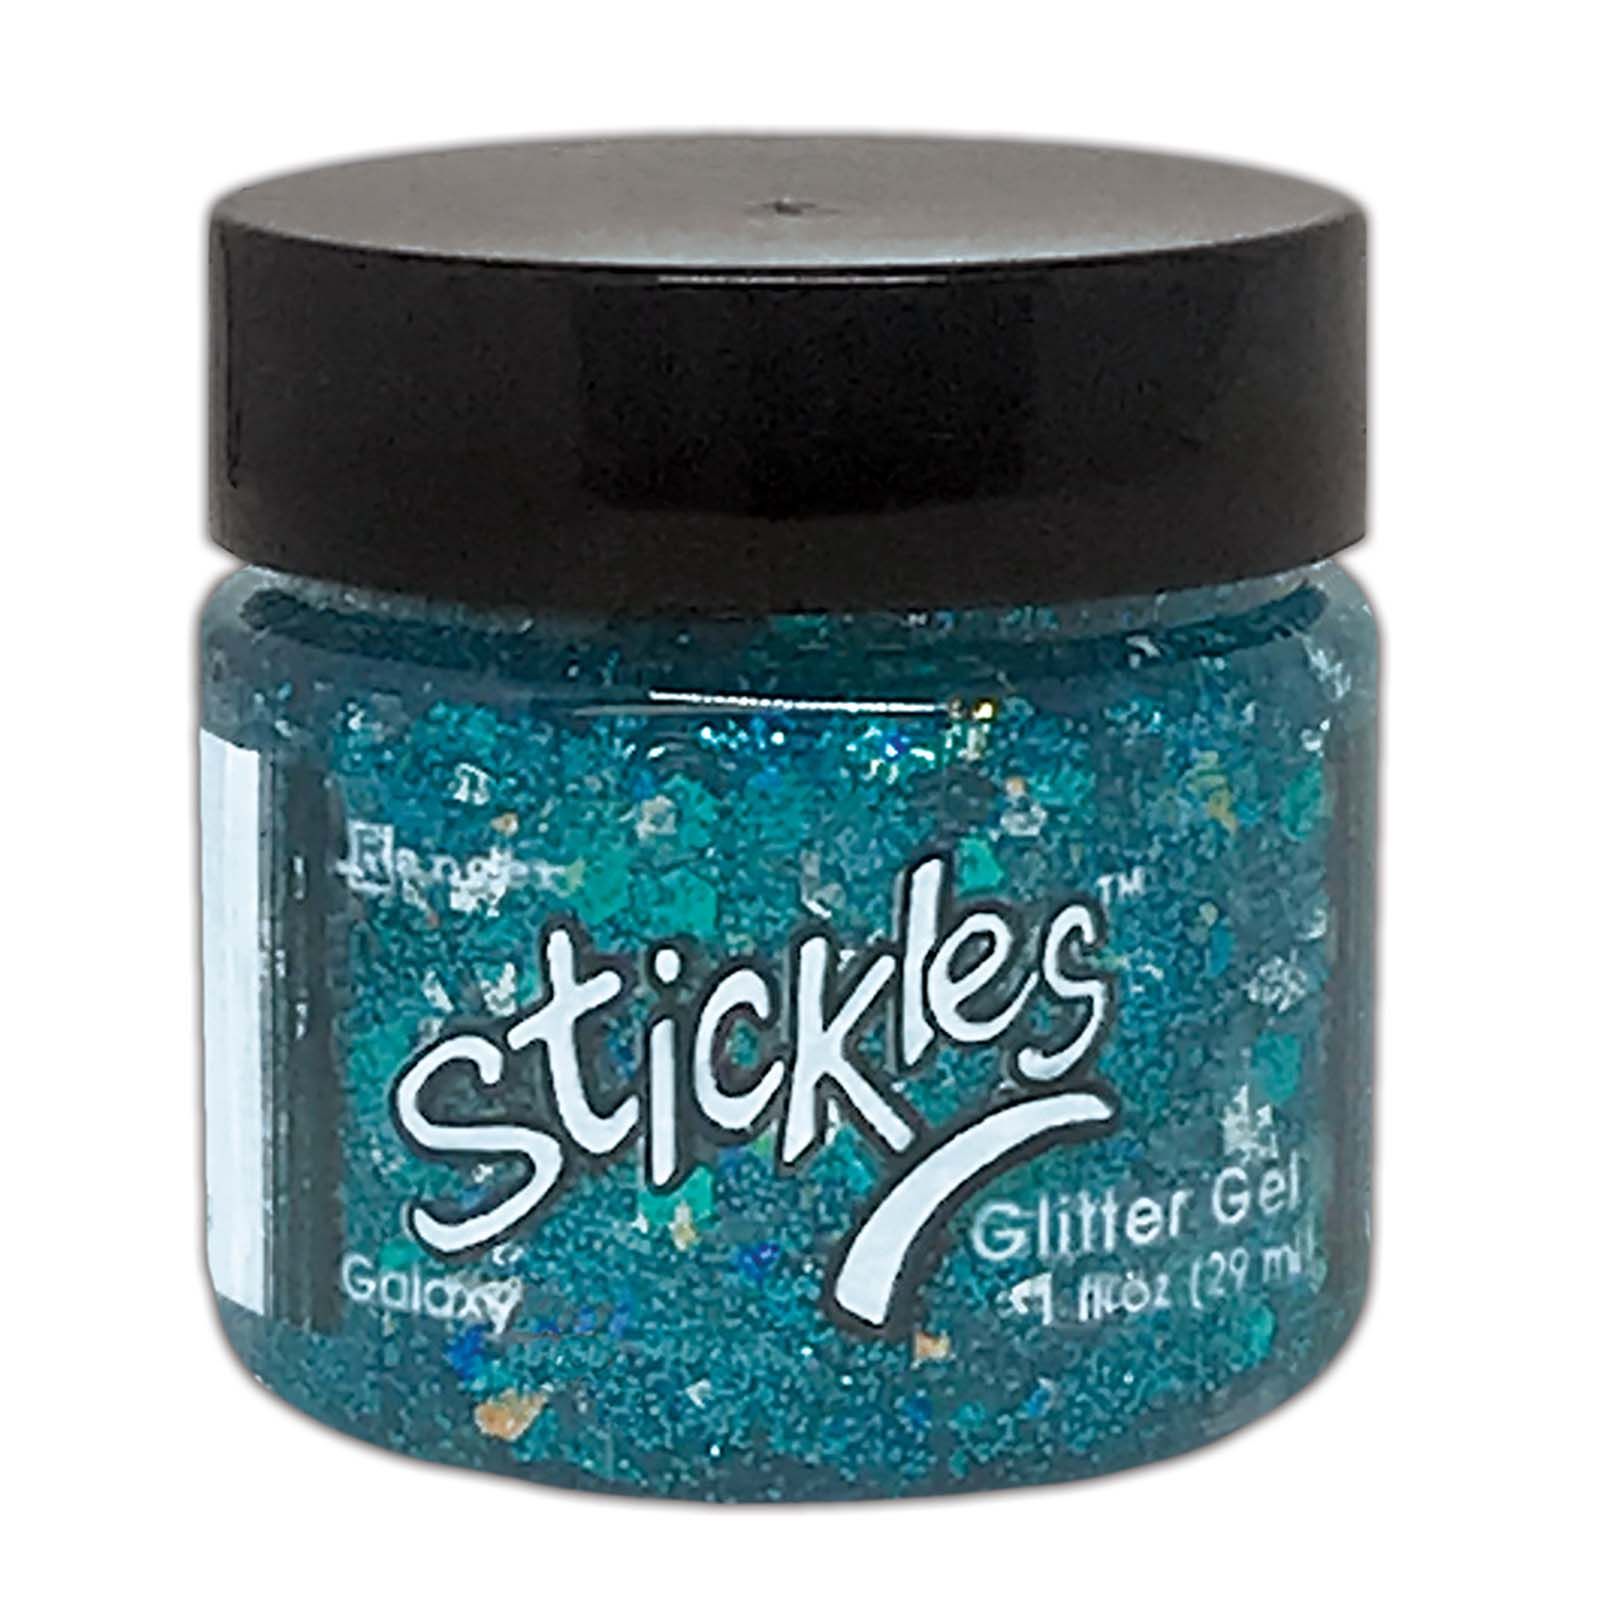 Green Stickles Glitter Glue - Ranger Ink